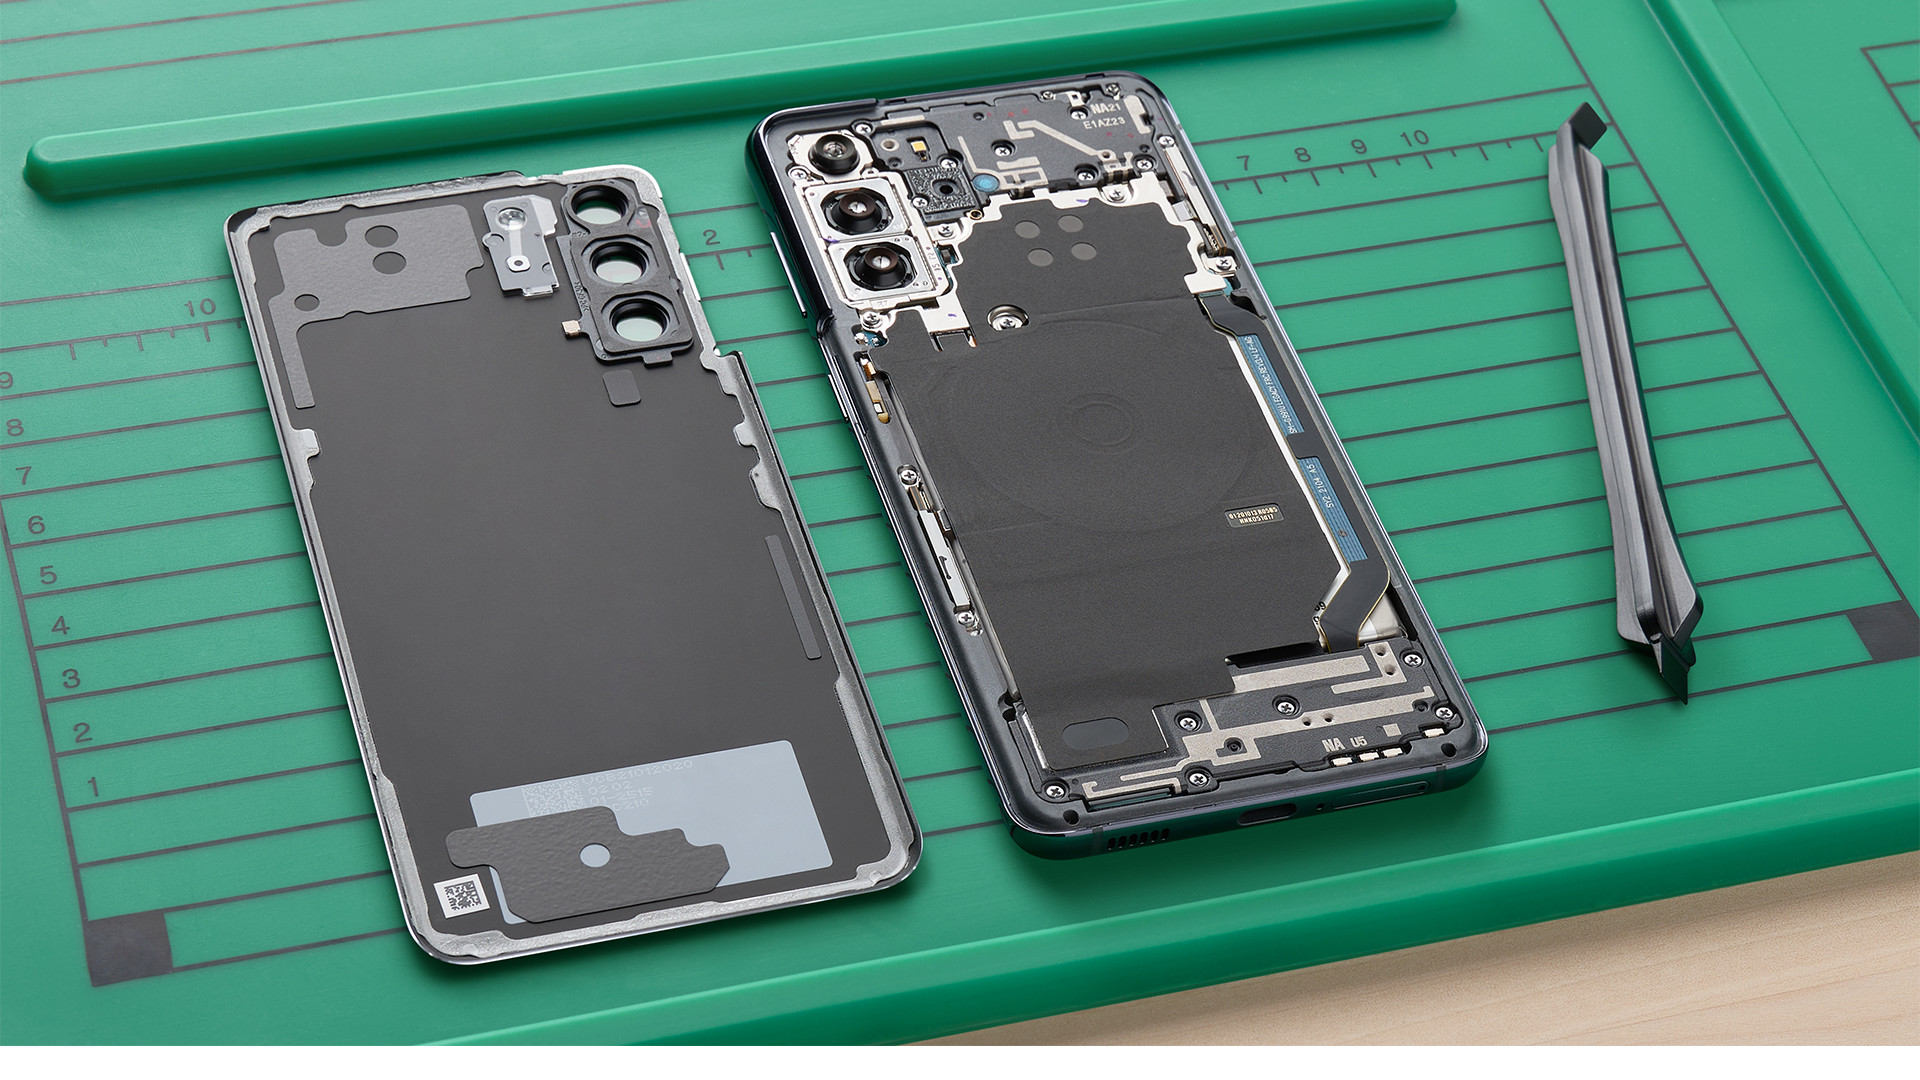 Reemplazo de pantalla de iPhone 6s - Guía de reparación iFixit